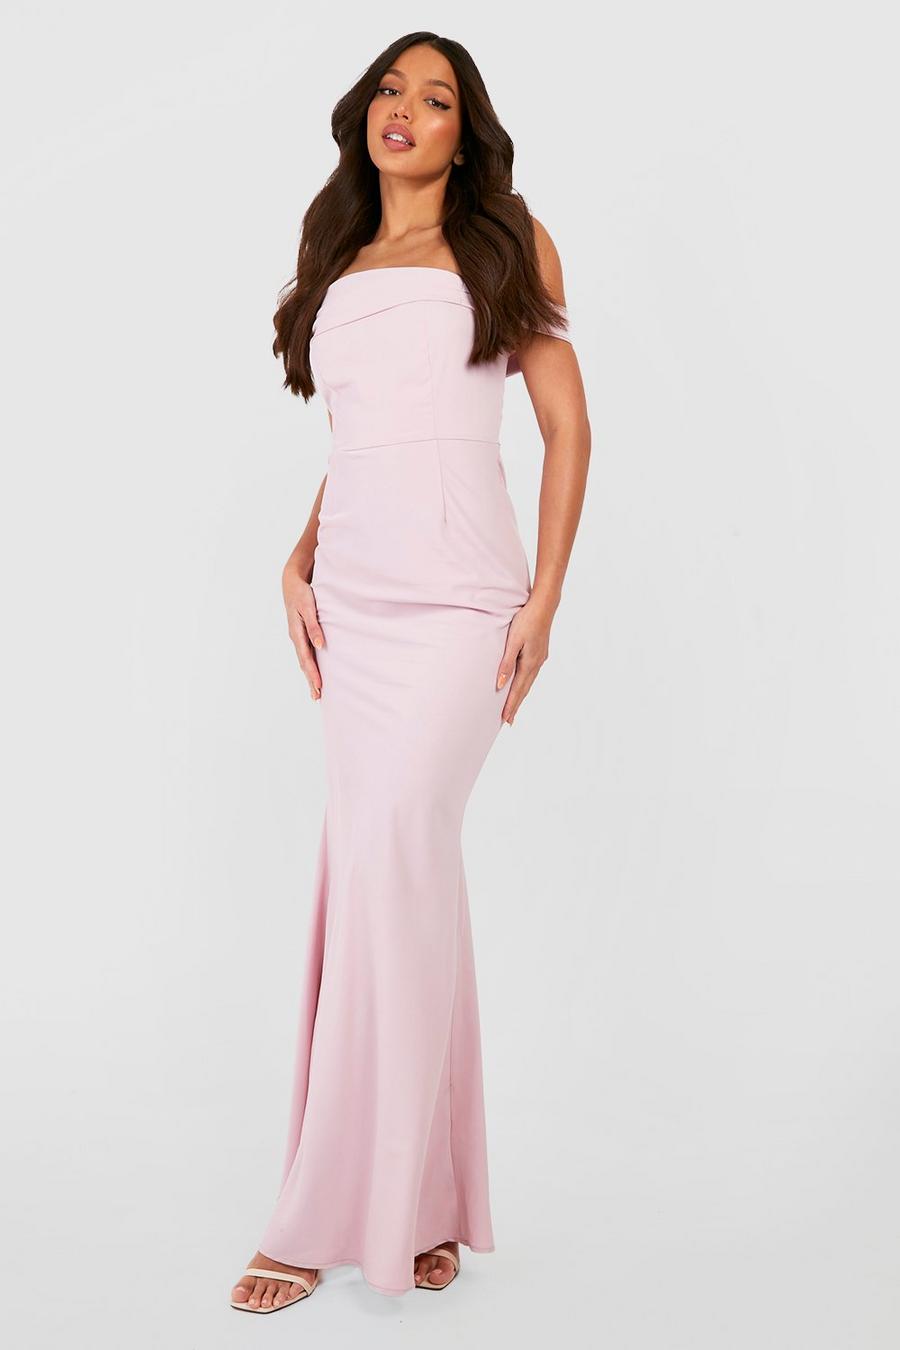 Blush pink Tall Bridesmaid Off The Shoulder Maxi Dress